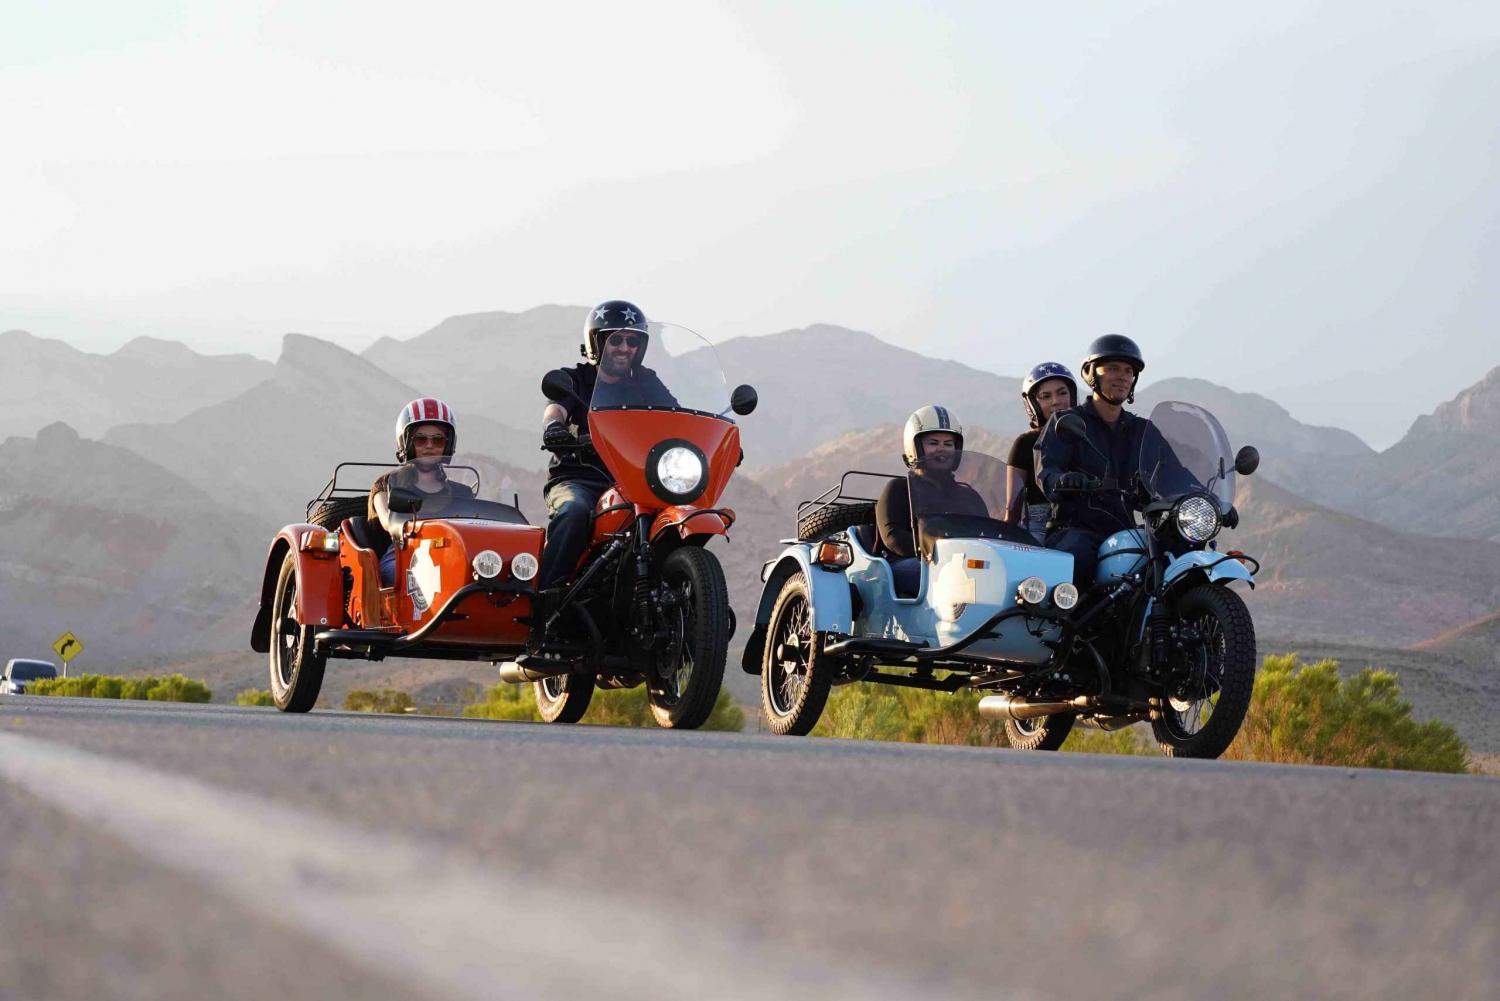 Las Vegas: Red Rock Canyon Private Sidecar Half-Day Tour